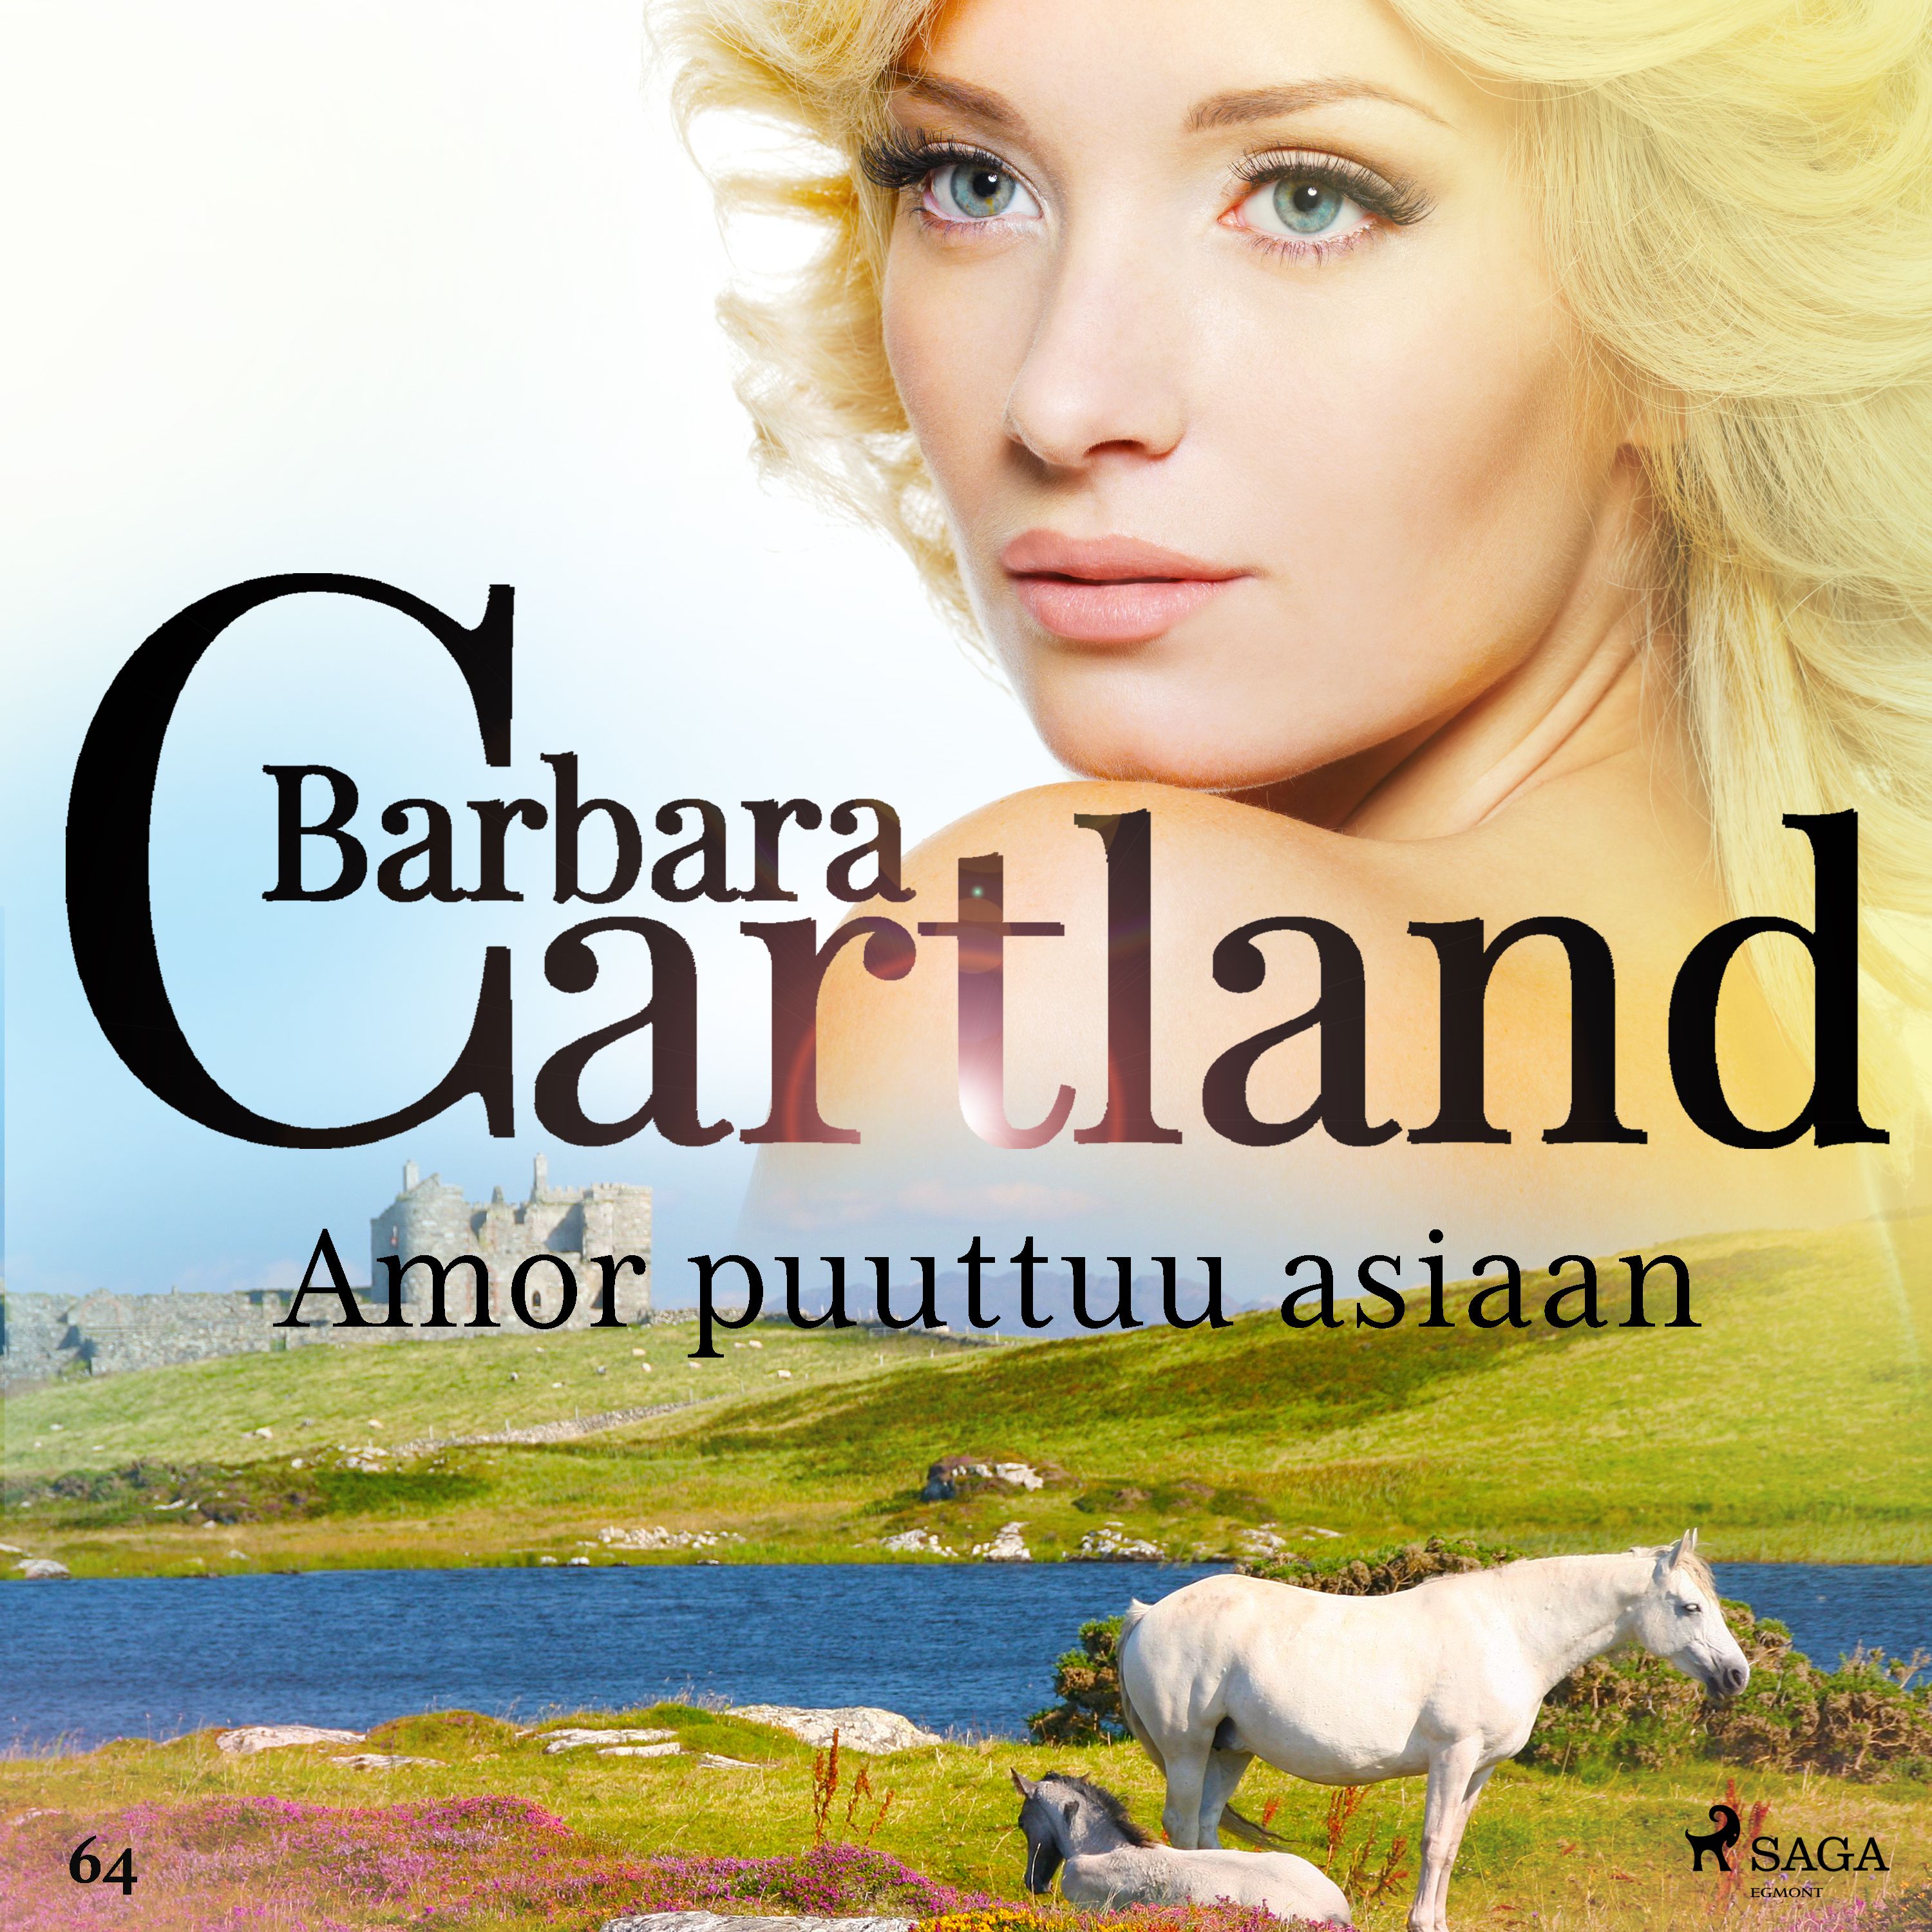 Amor puuttuu asiaan, audiobook by Barbara Cartland